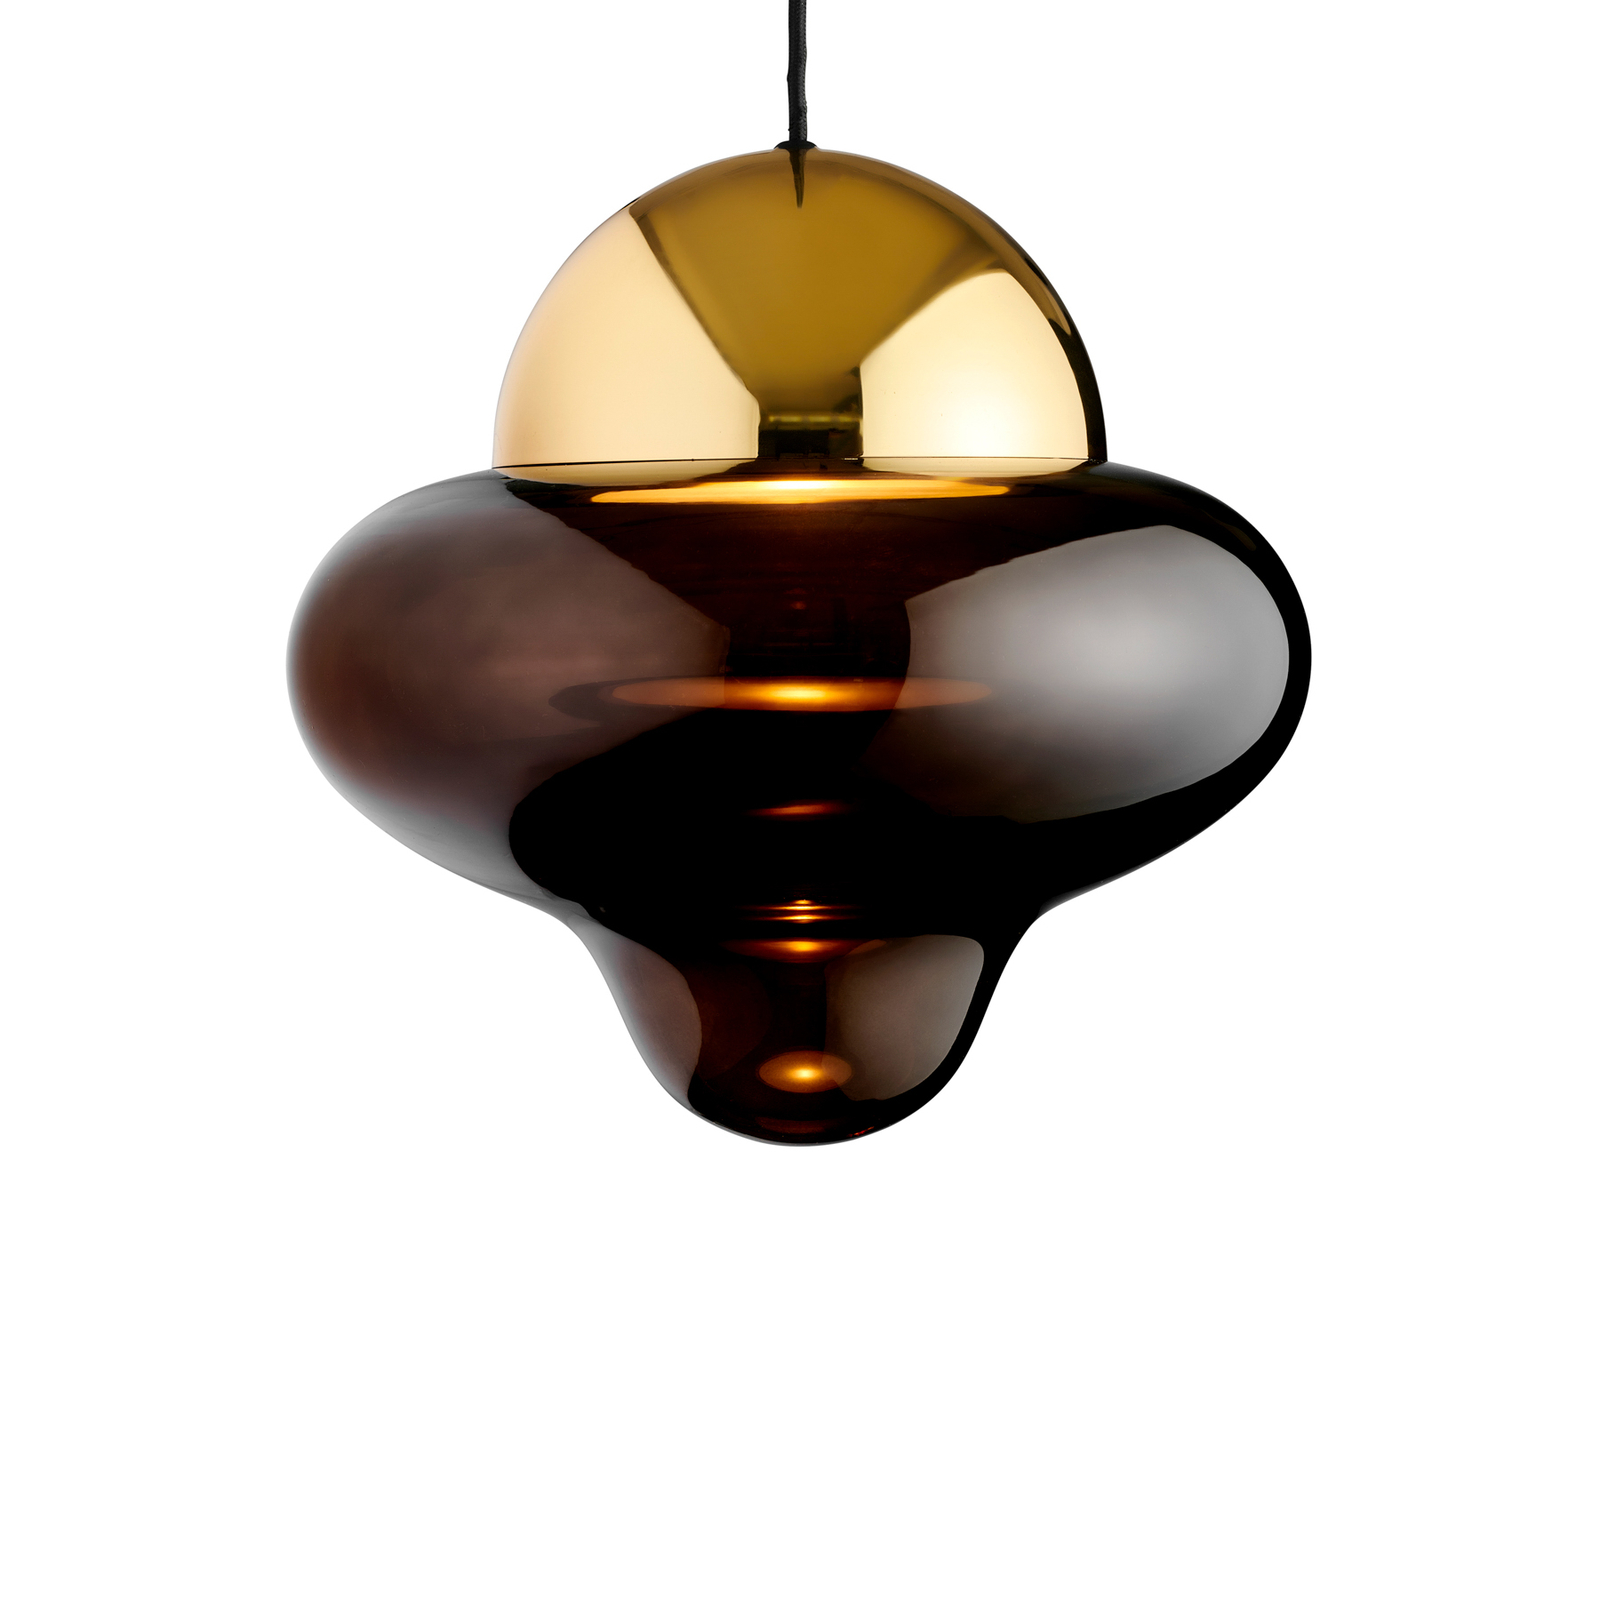 Suspension LED Nutty XL, brun / doré, Ø 30 cm, verre